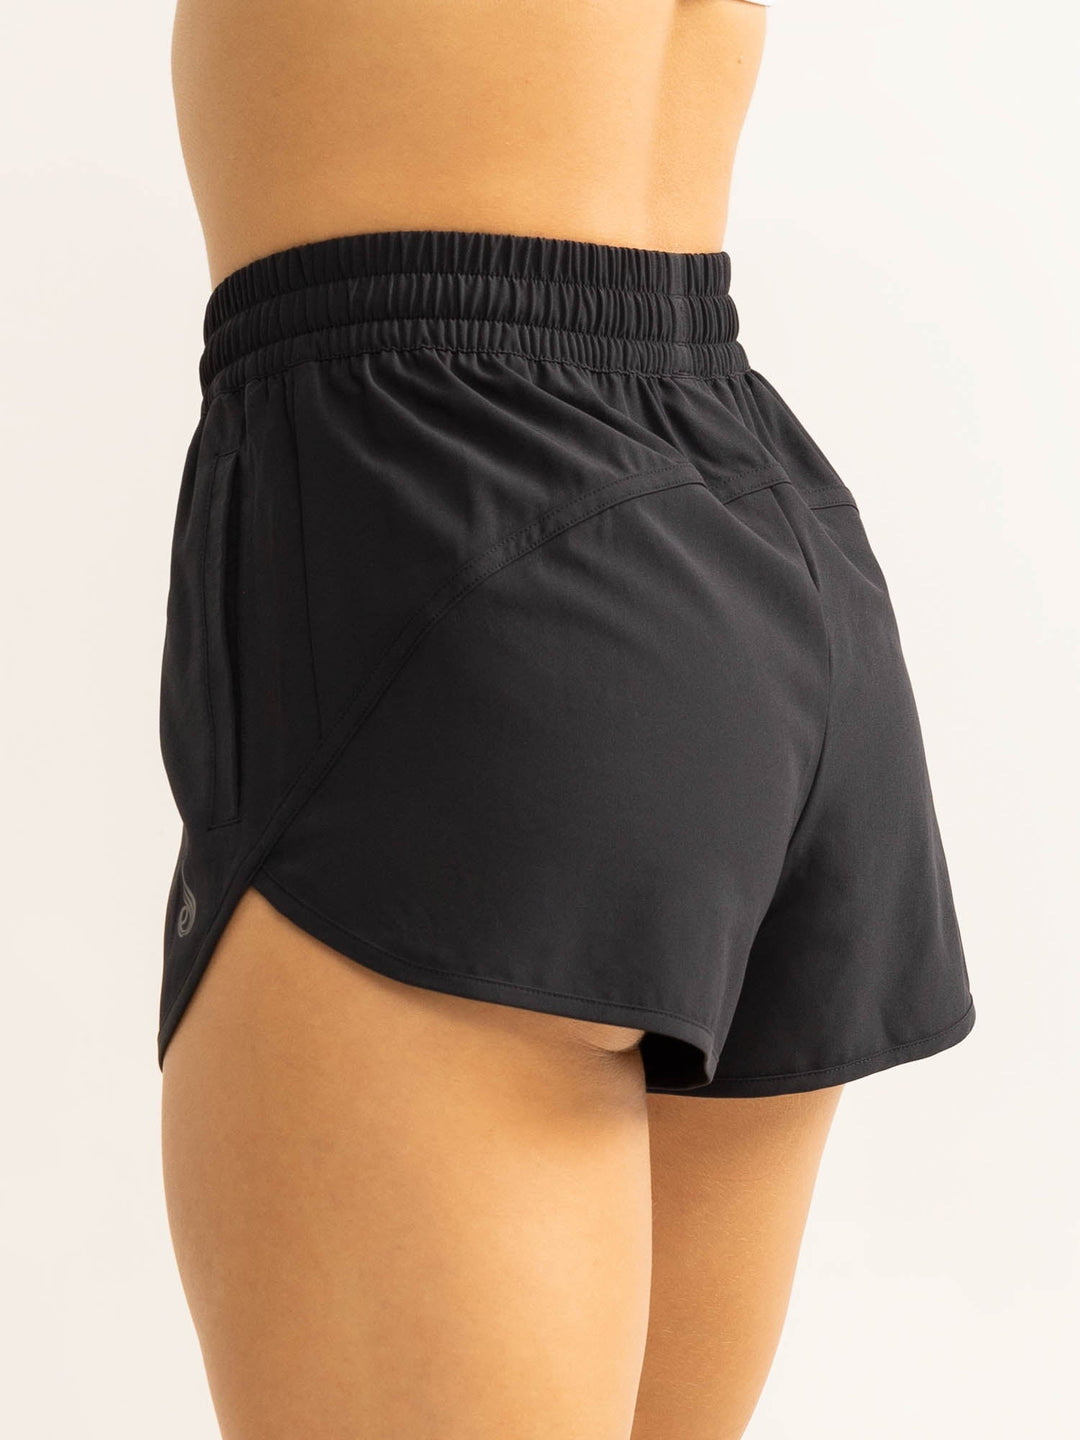 Persist Training Shorts - Black Clothing Ryderwear 